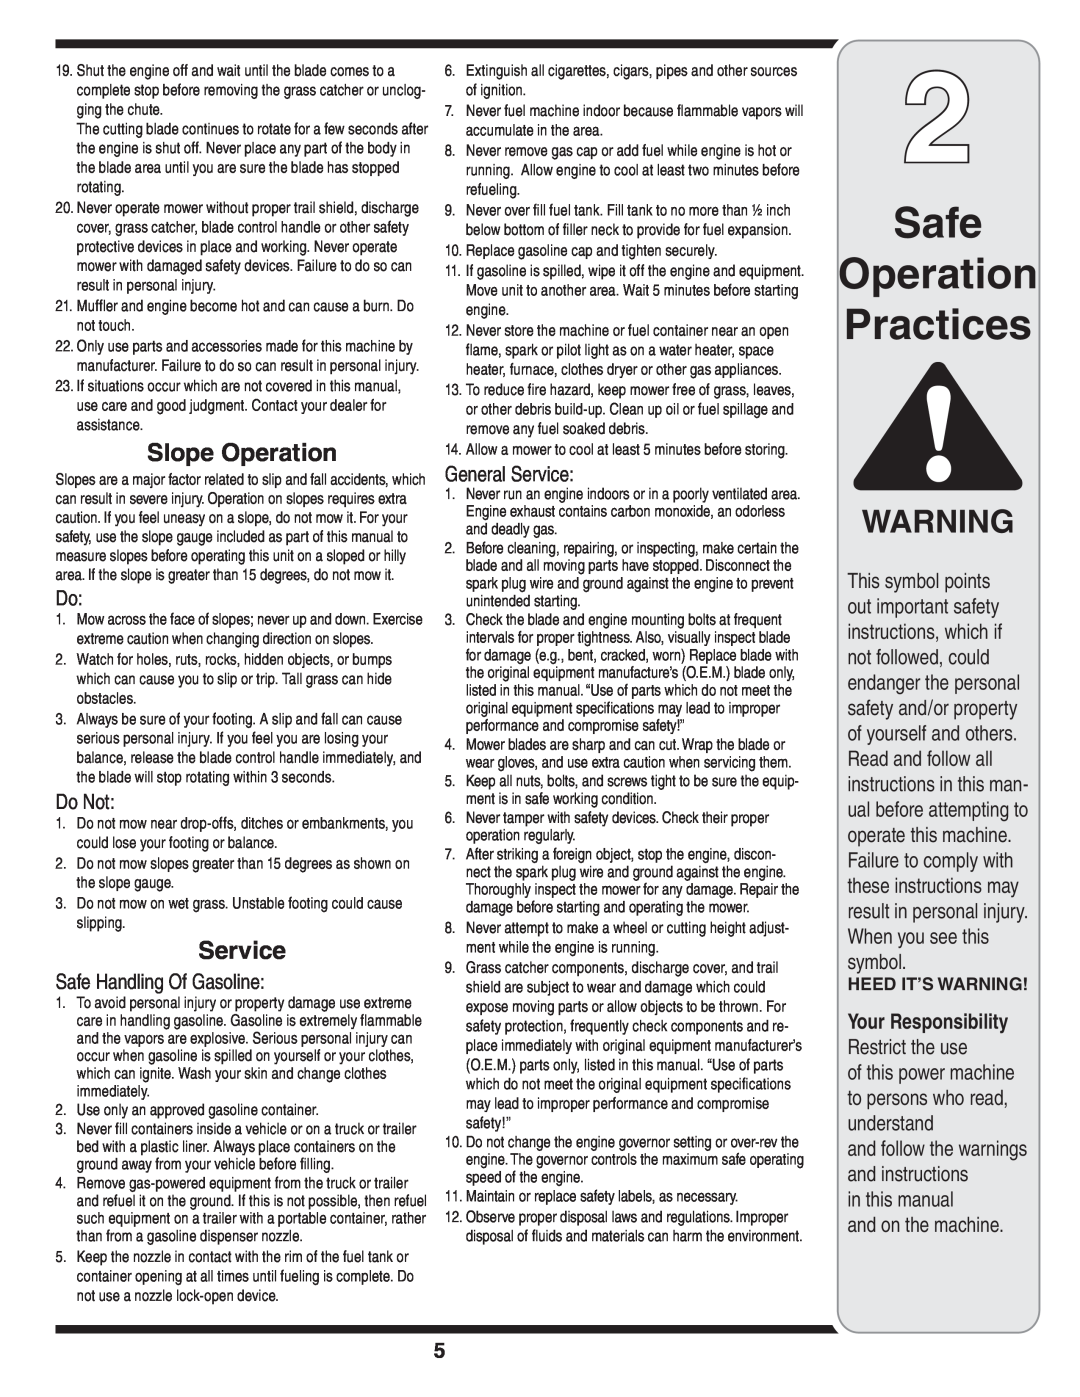 Troy-Bilt 420 warranty Safe Operation Practices, Slope Operation, Service, Heed It’S Warning 